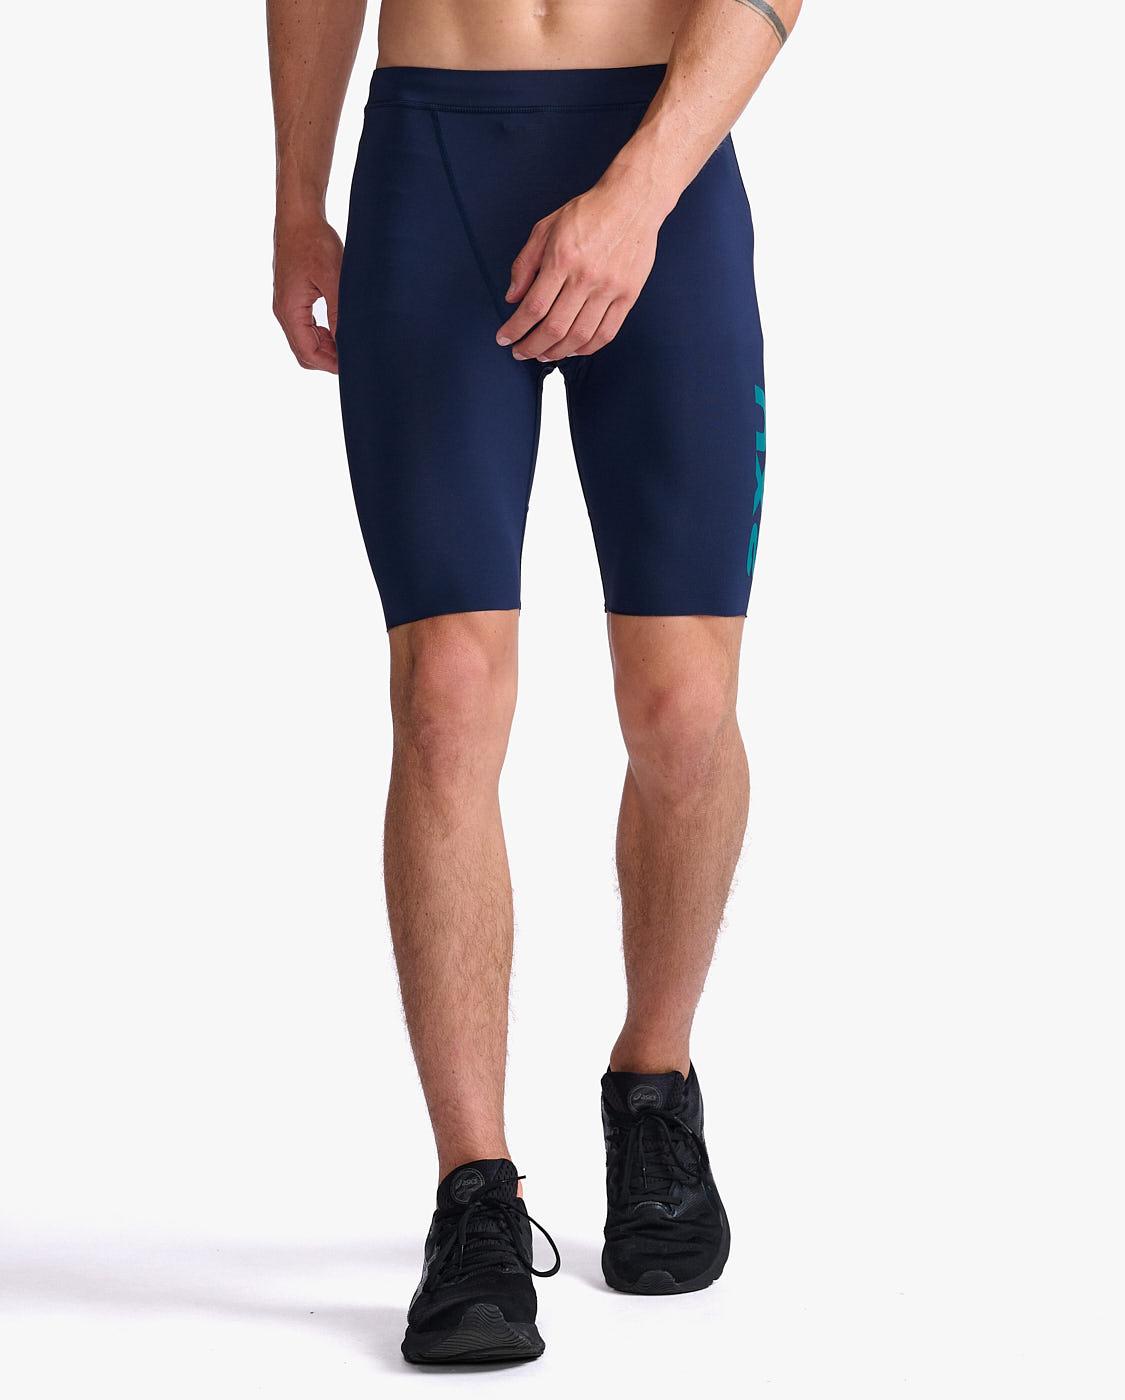 100% R-core X Shorts Black - L Black  Baggy Shorts